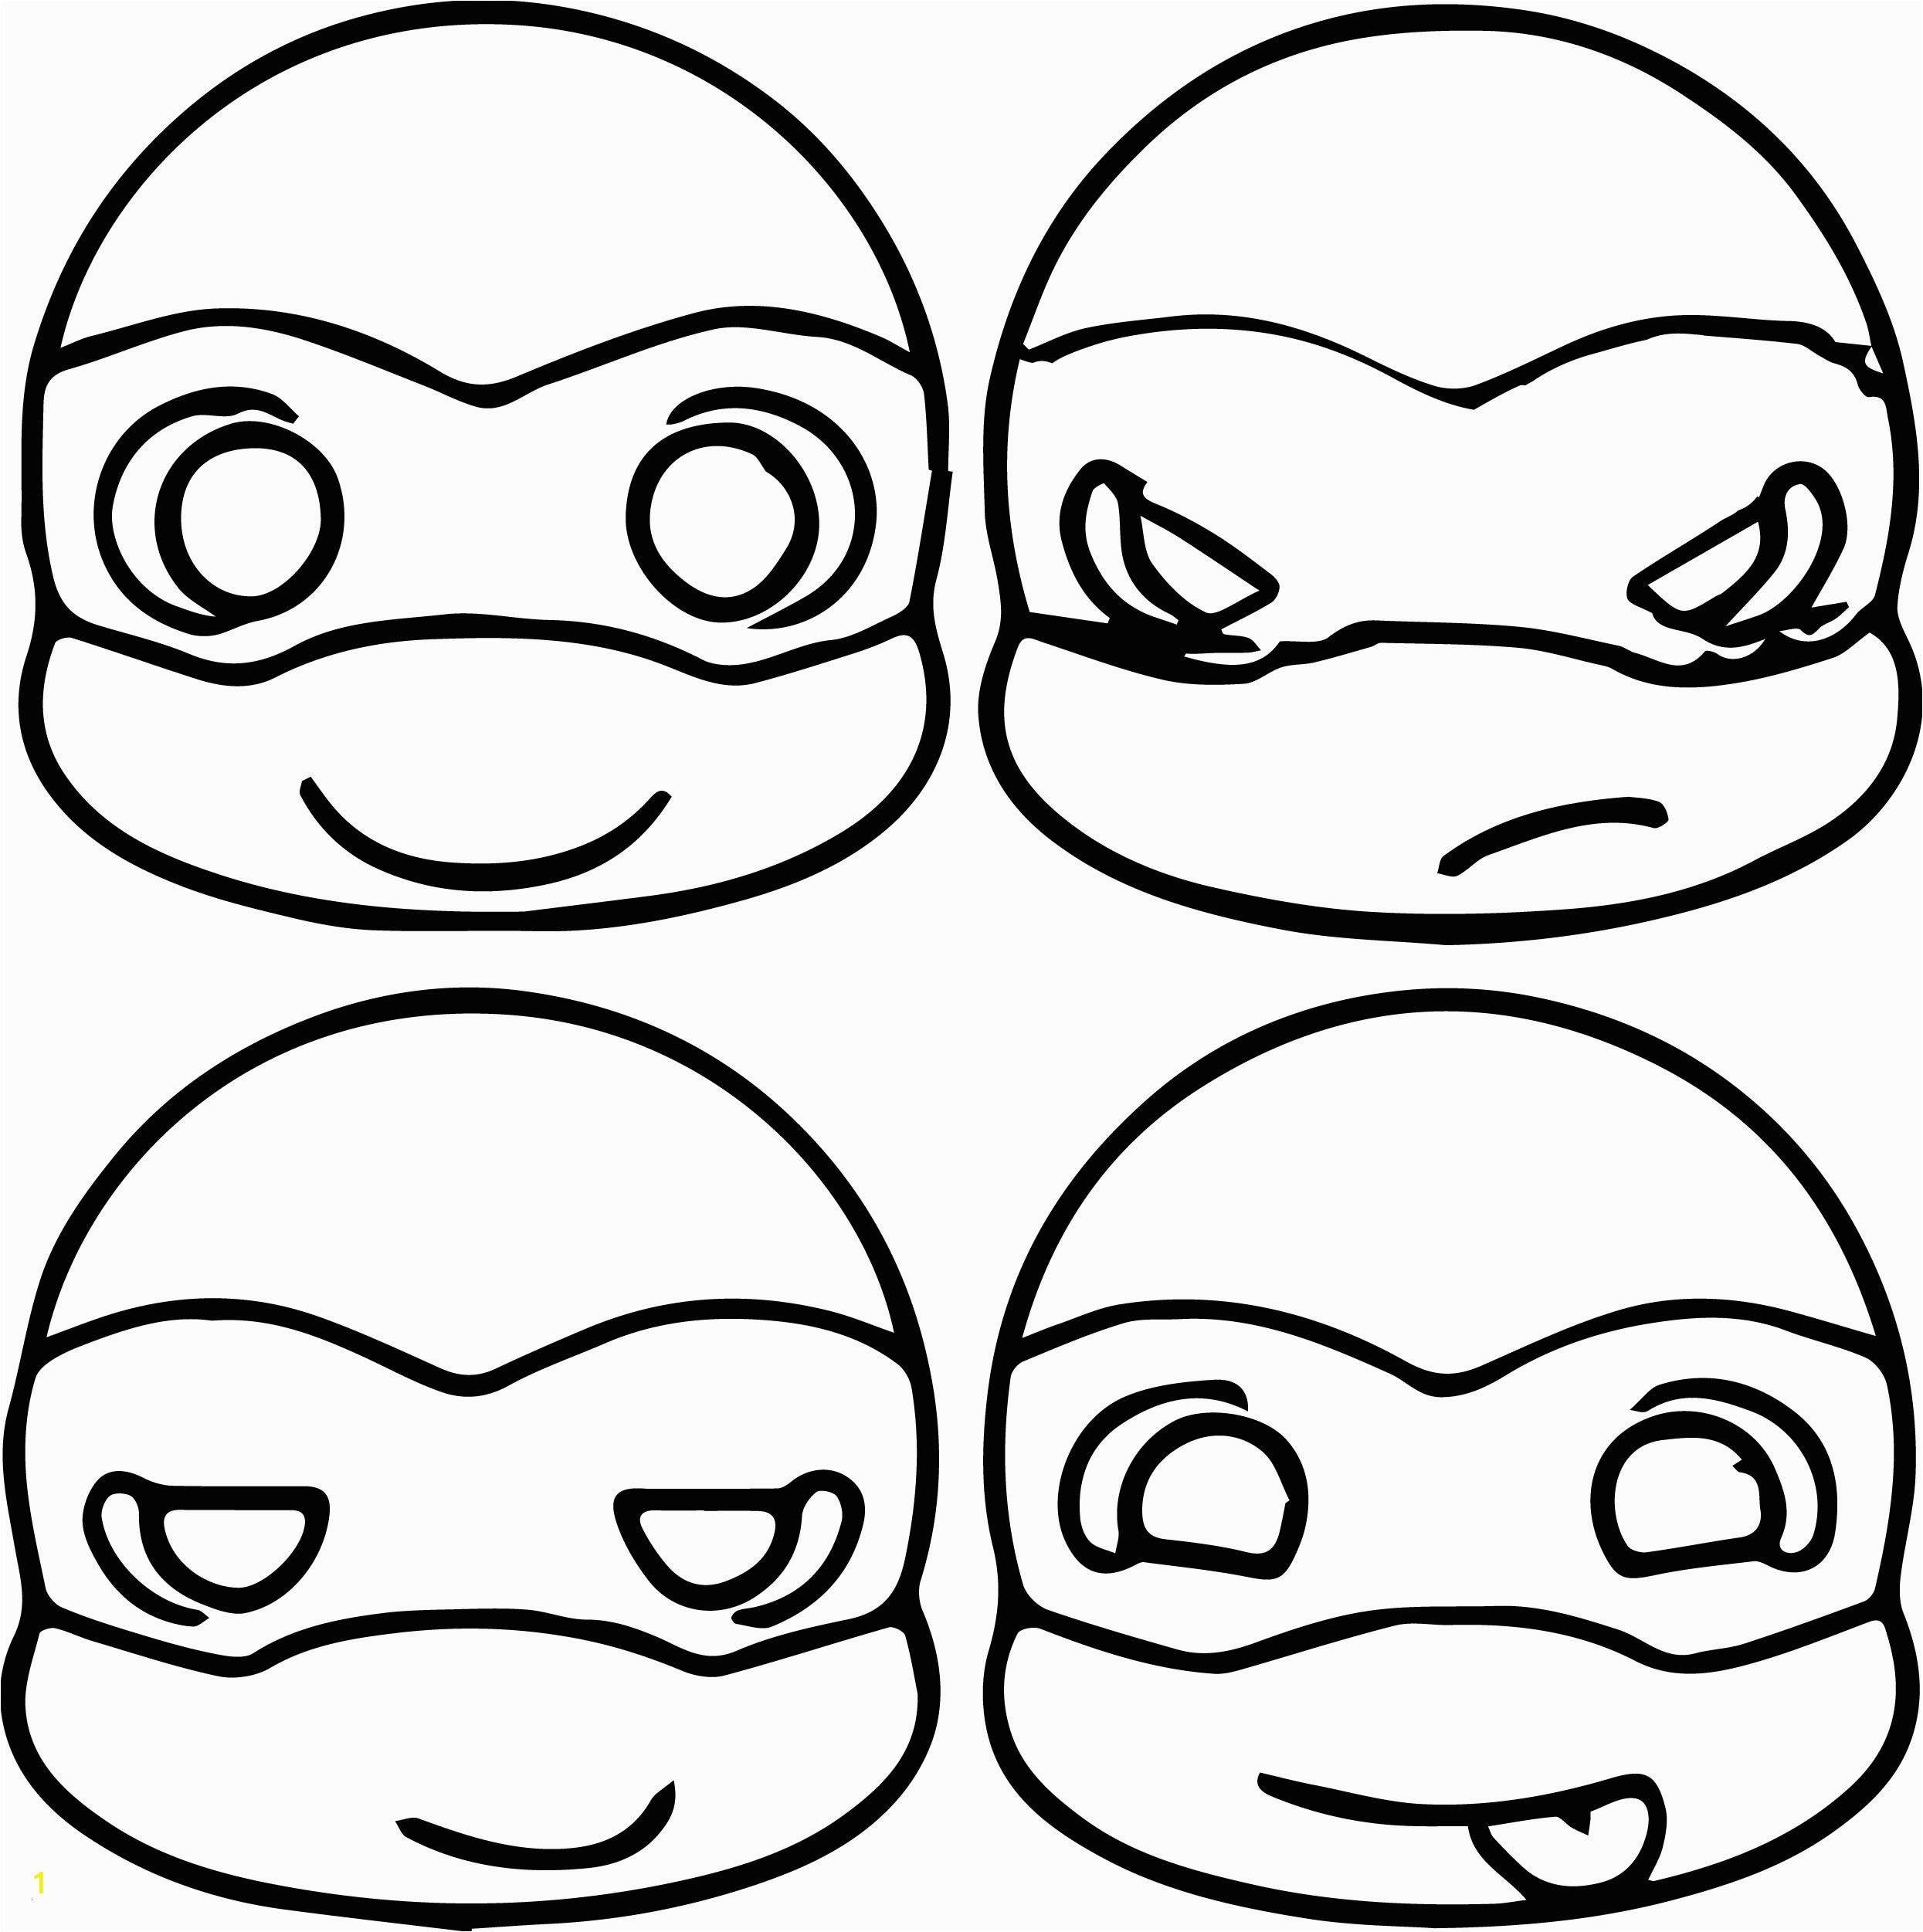 Teenage Mutant Ninja Turtles Coloring Pages Nickelodeon Teenage Mutant Ninja Turtles Coloring Pages